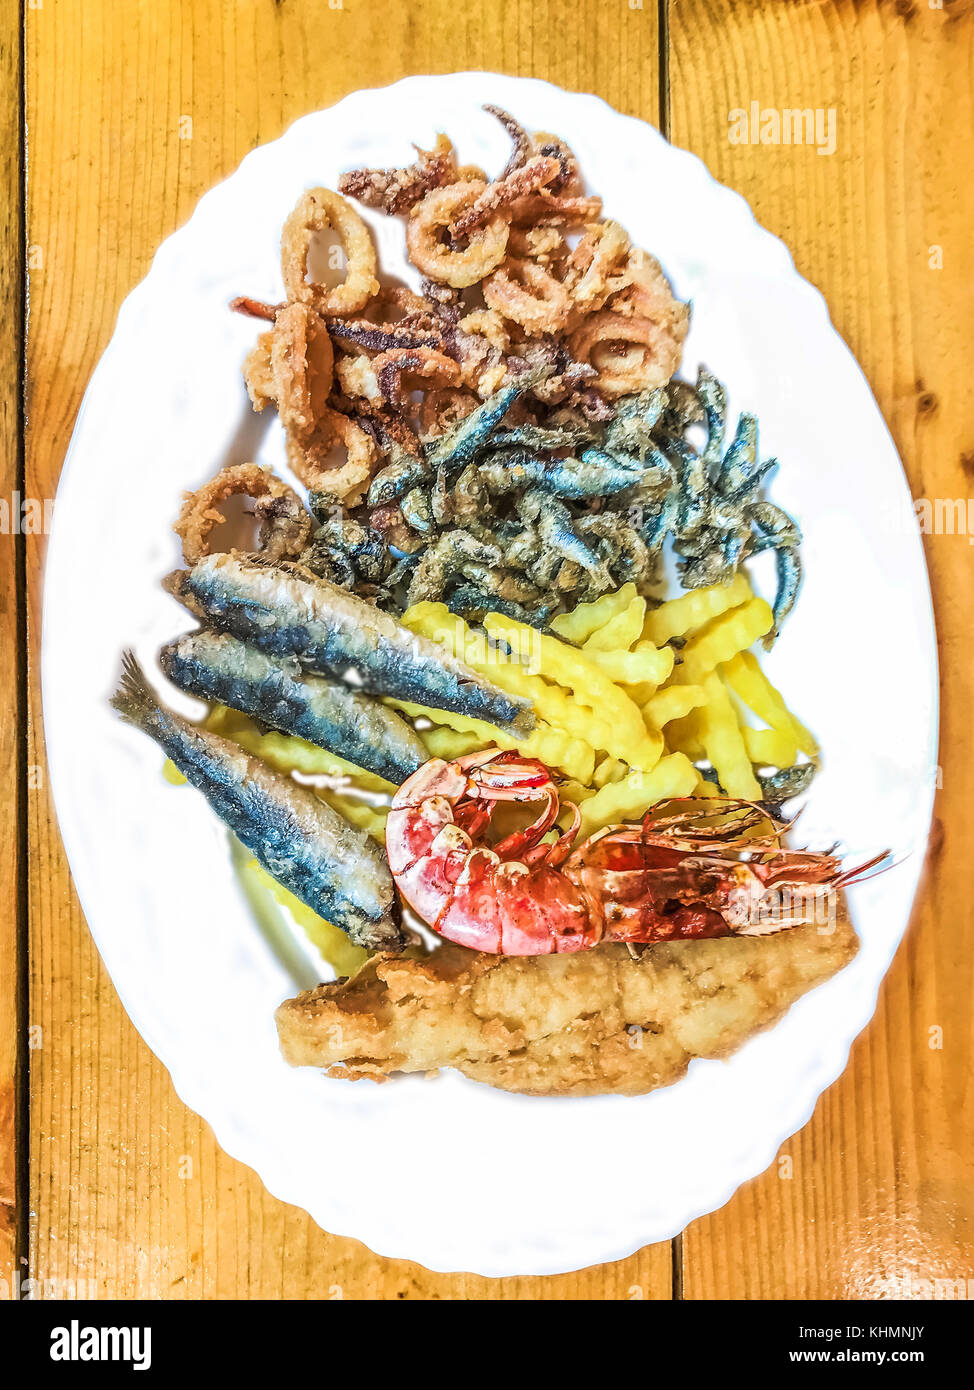 National dish of Croatia - Adriatic fried fish Stock Photo